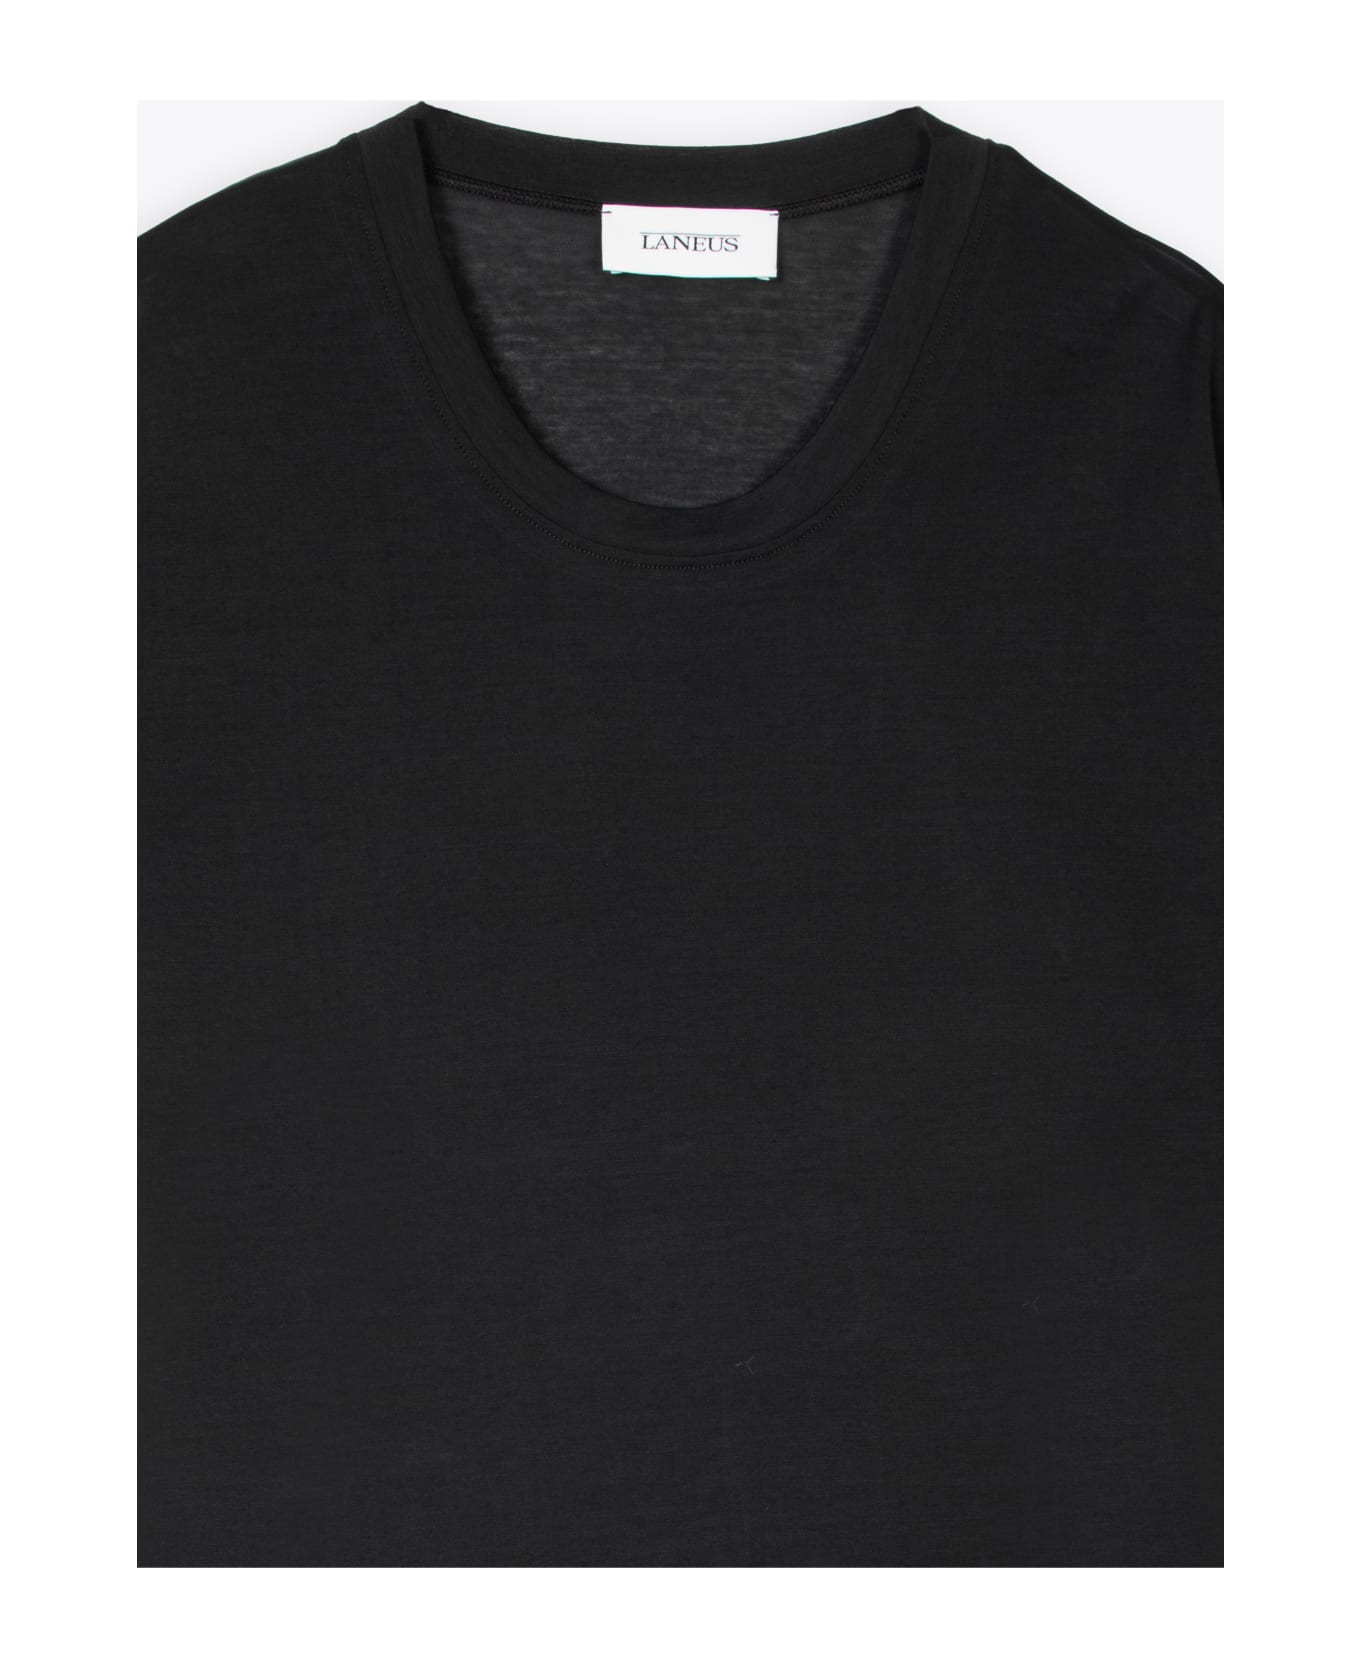 Laneus Crewneck Man Black ultra-light cotton t-shirt - Nero シャツ